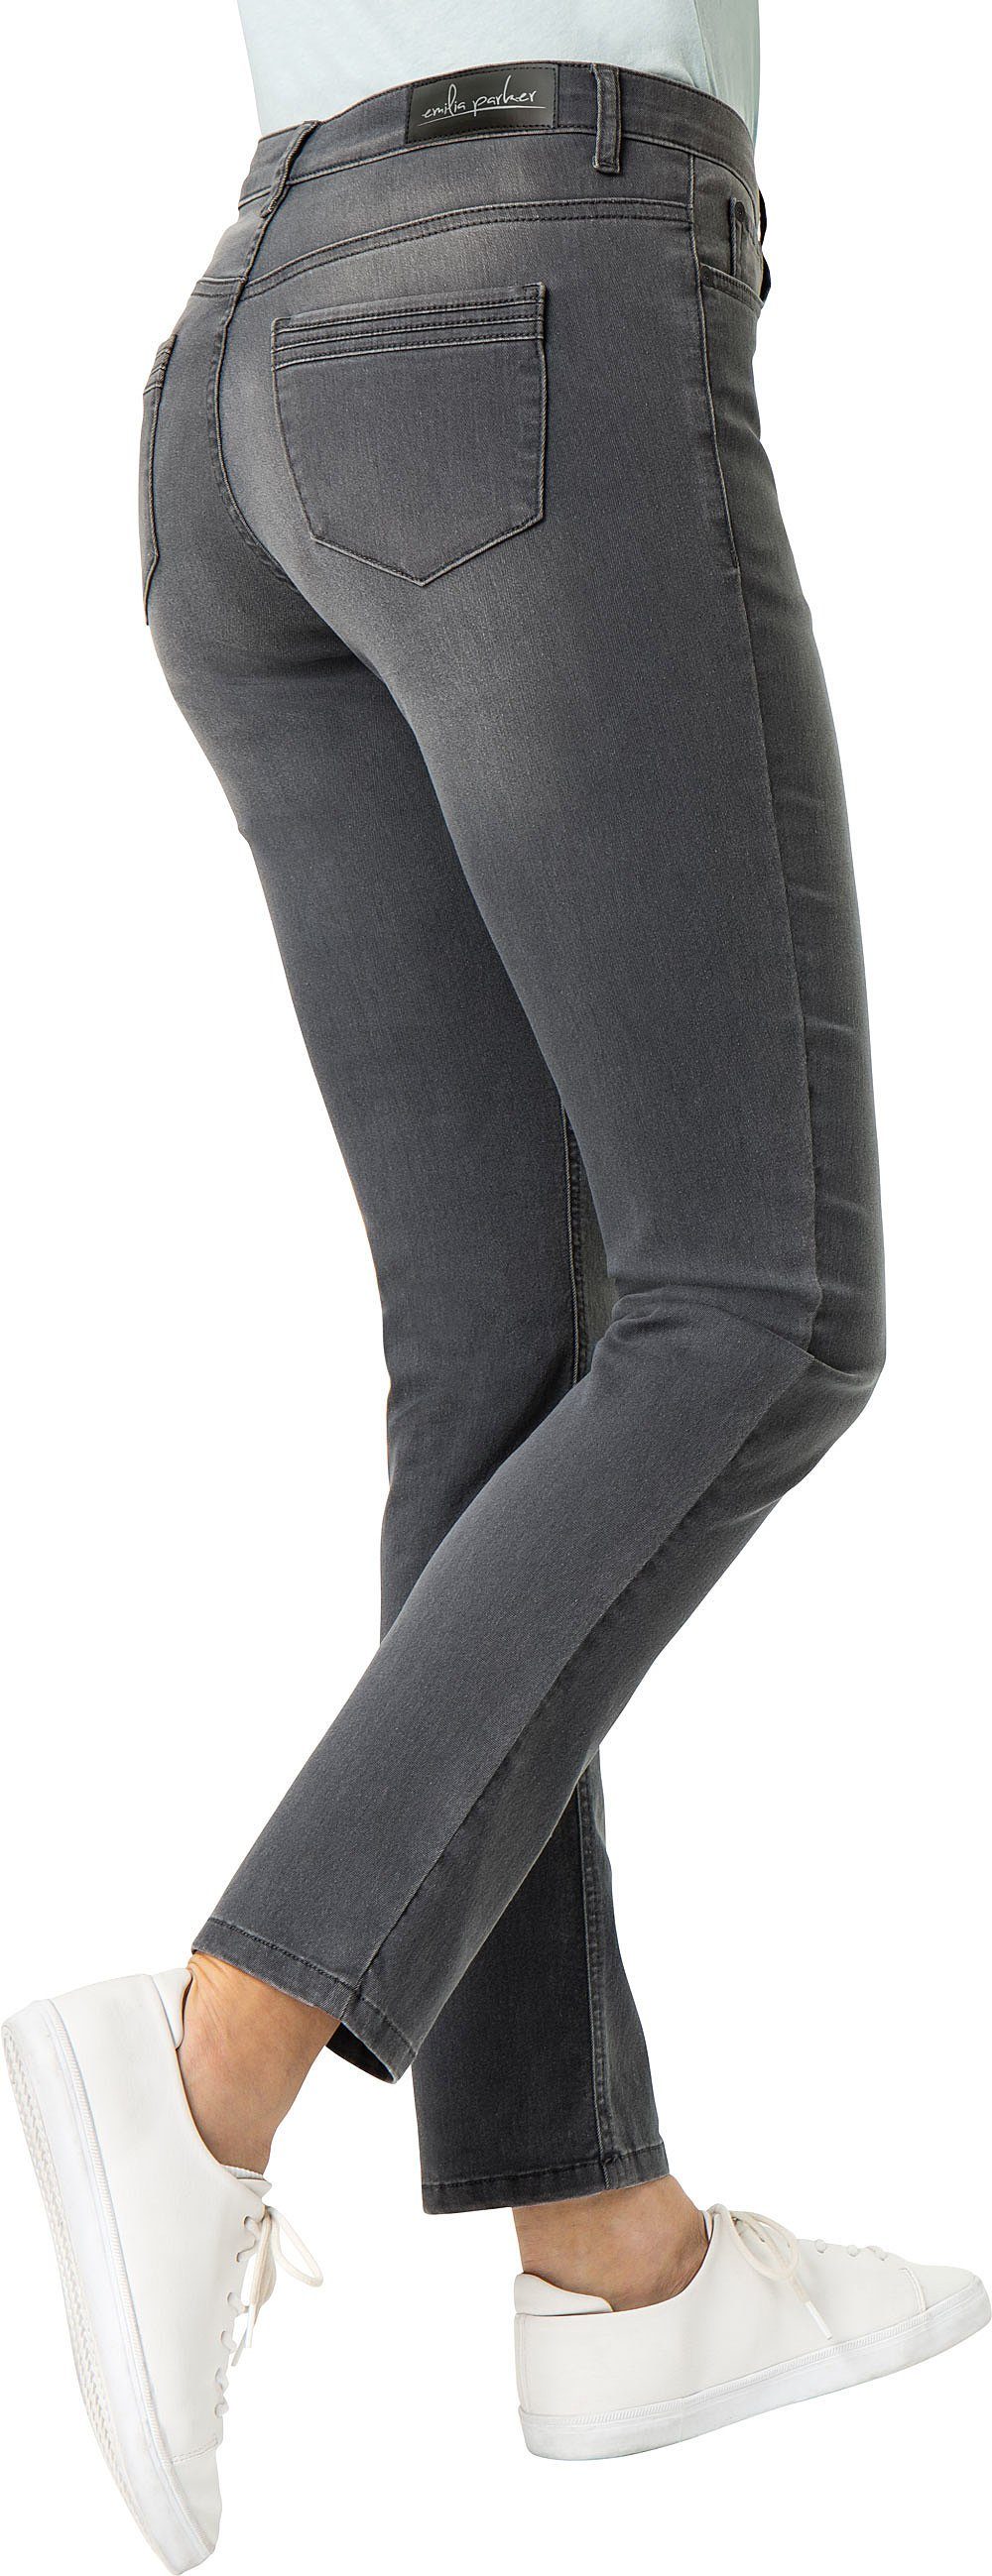 Emilia Parker Sitz knackigem Jeans mit grau Stretch-Hose ultrabequeme